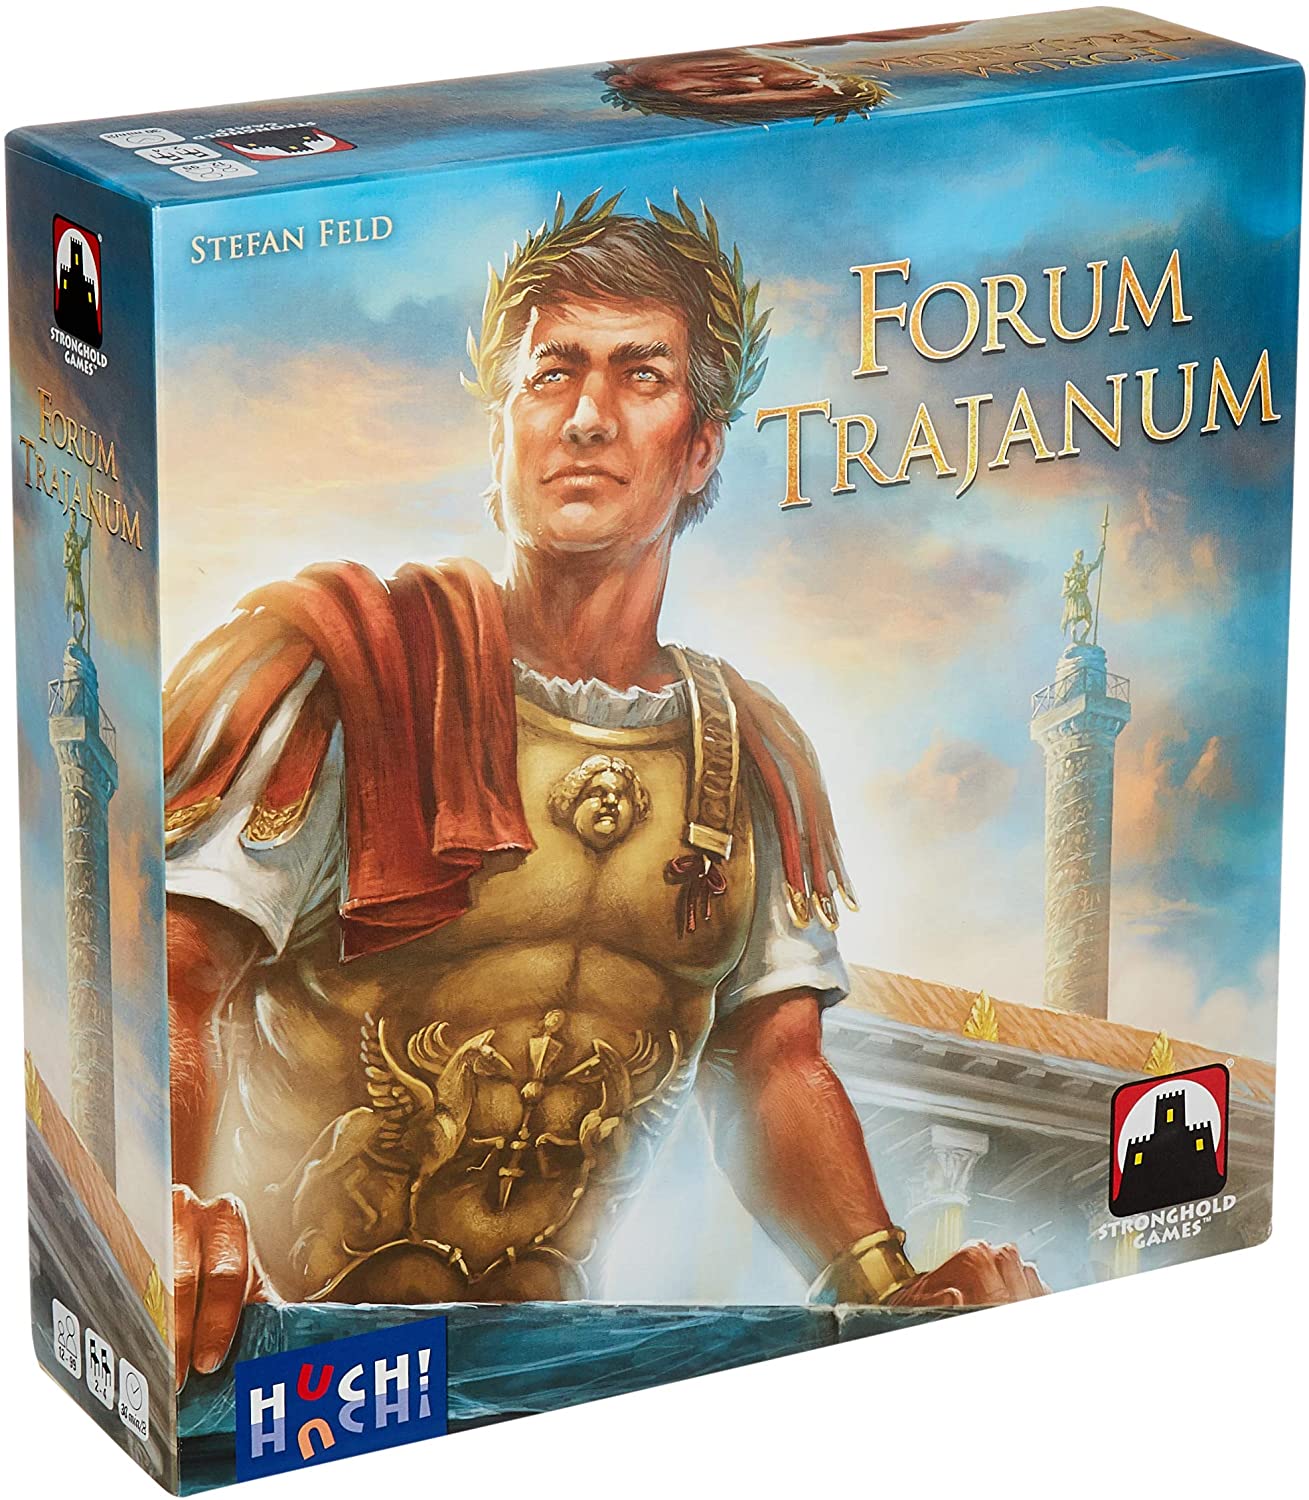 Forum Trajanum Stronghold Games